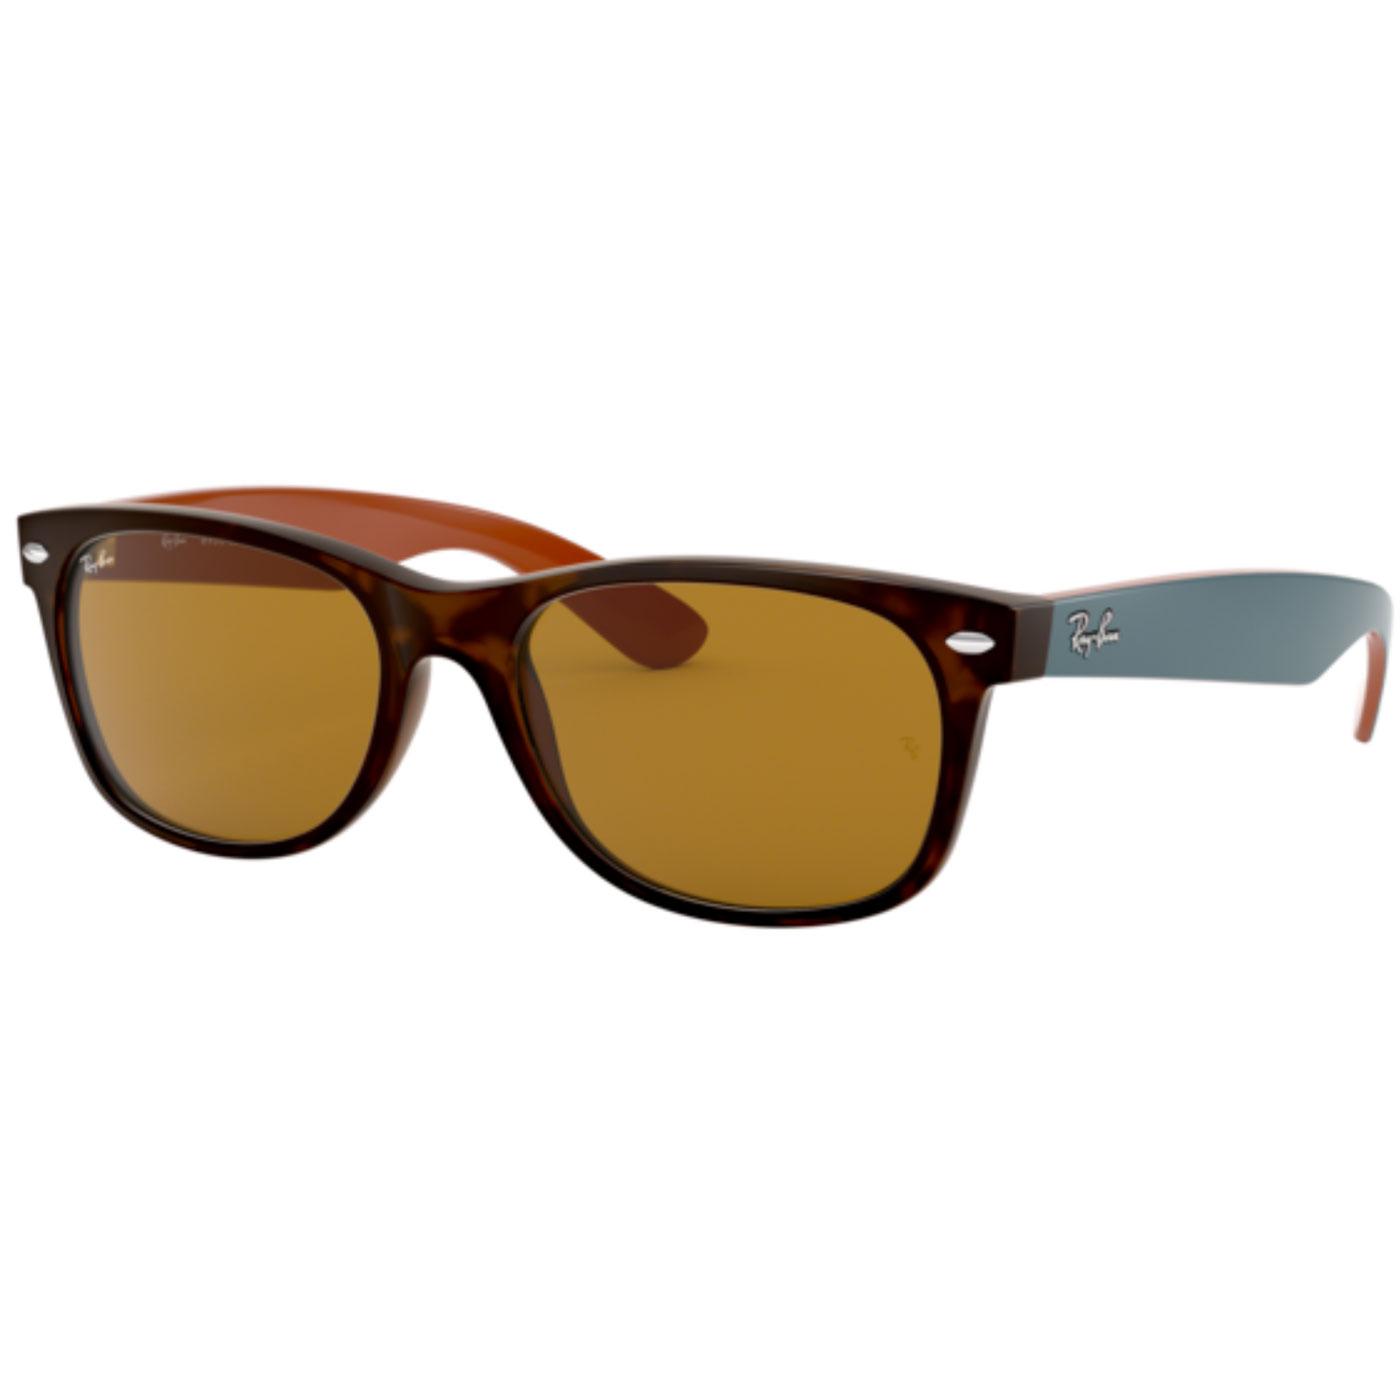 New Wayfarer RAY-BAN Retro Sunglasses -Brown/Green